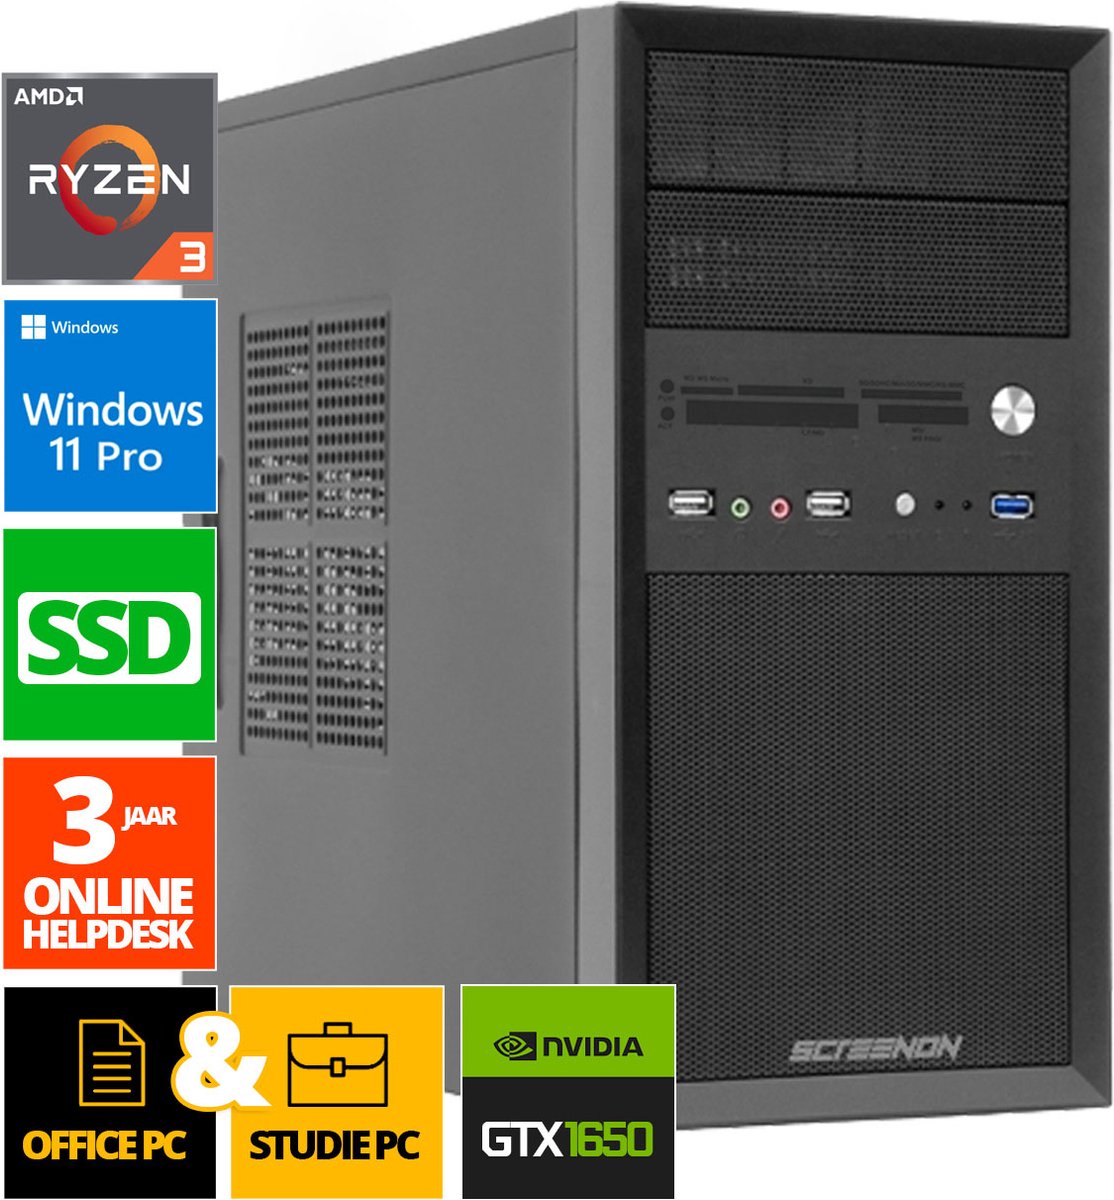 Office Computer - Ryzen 3 - 2048GB SSD - 32GB RAM - GTX 1650 - WX32348 - Windows 11 - ScreenON - Allround Business PC + 5 in 1 Multifuntionele Cardreader + WiFi & Bluetooth